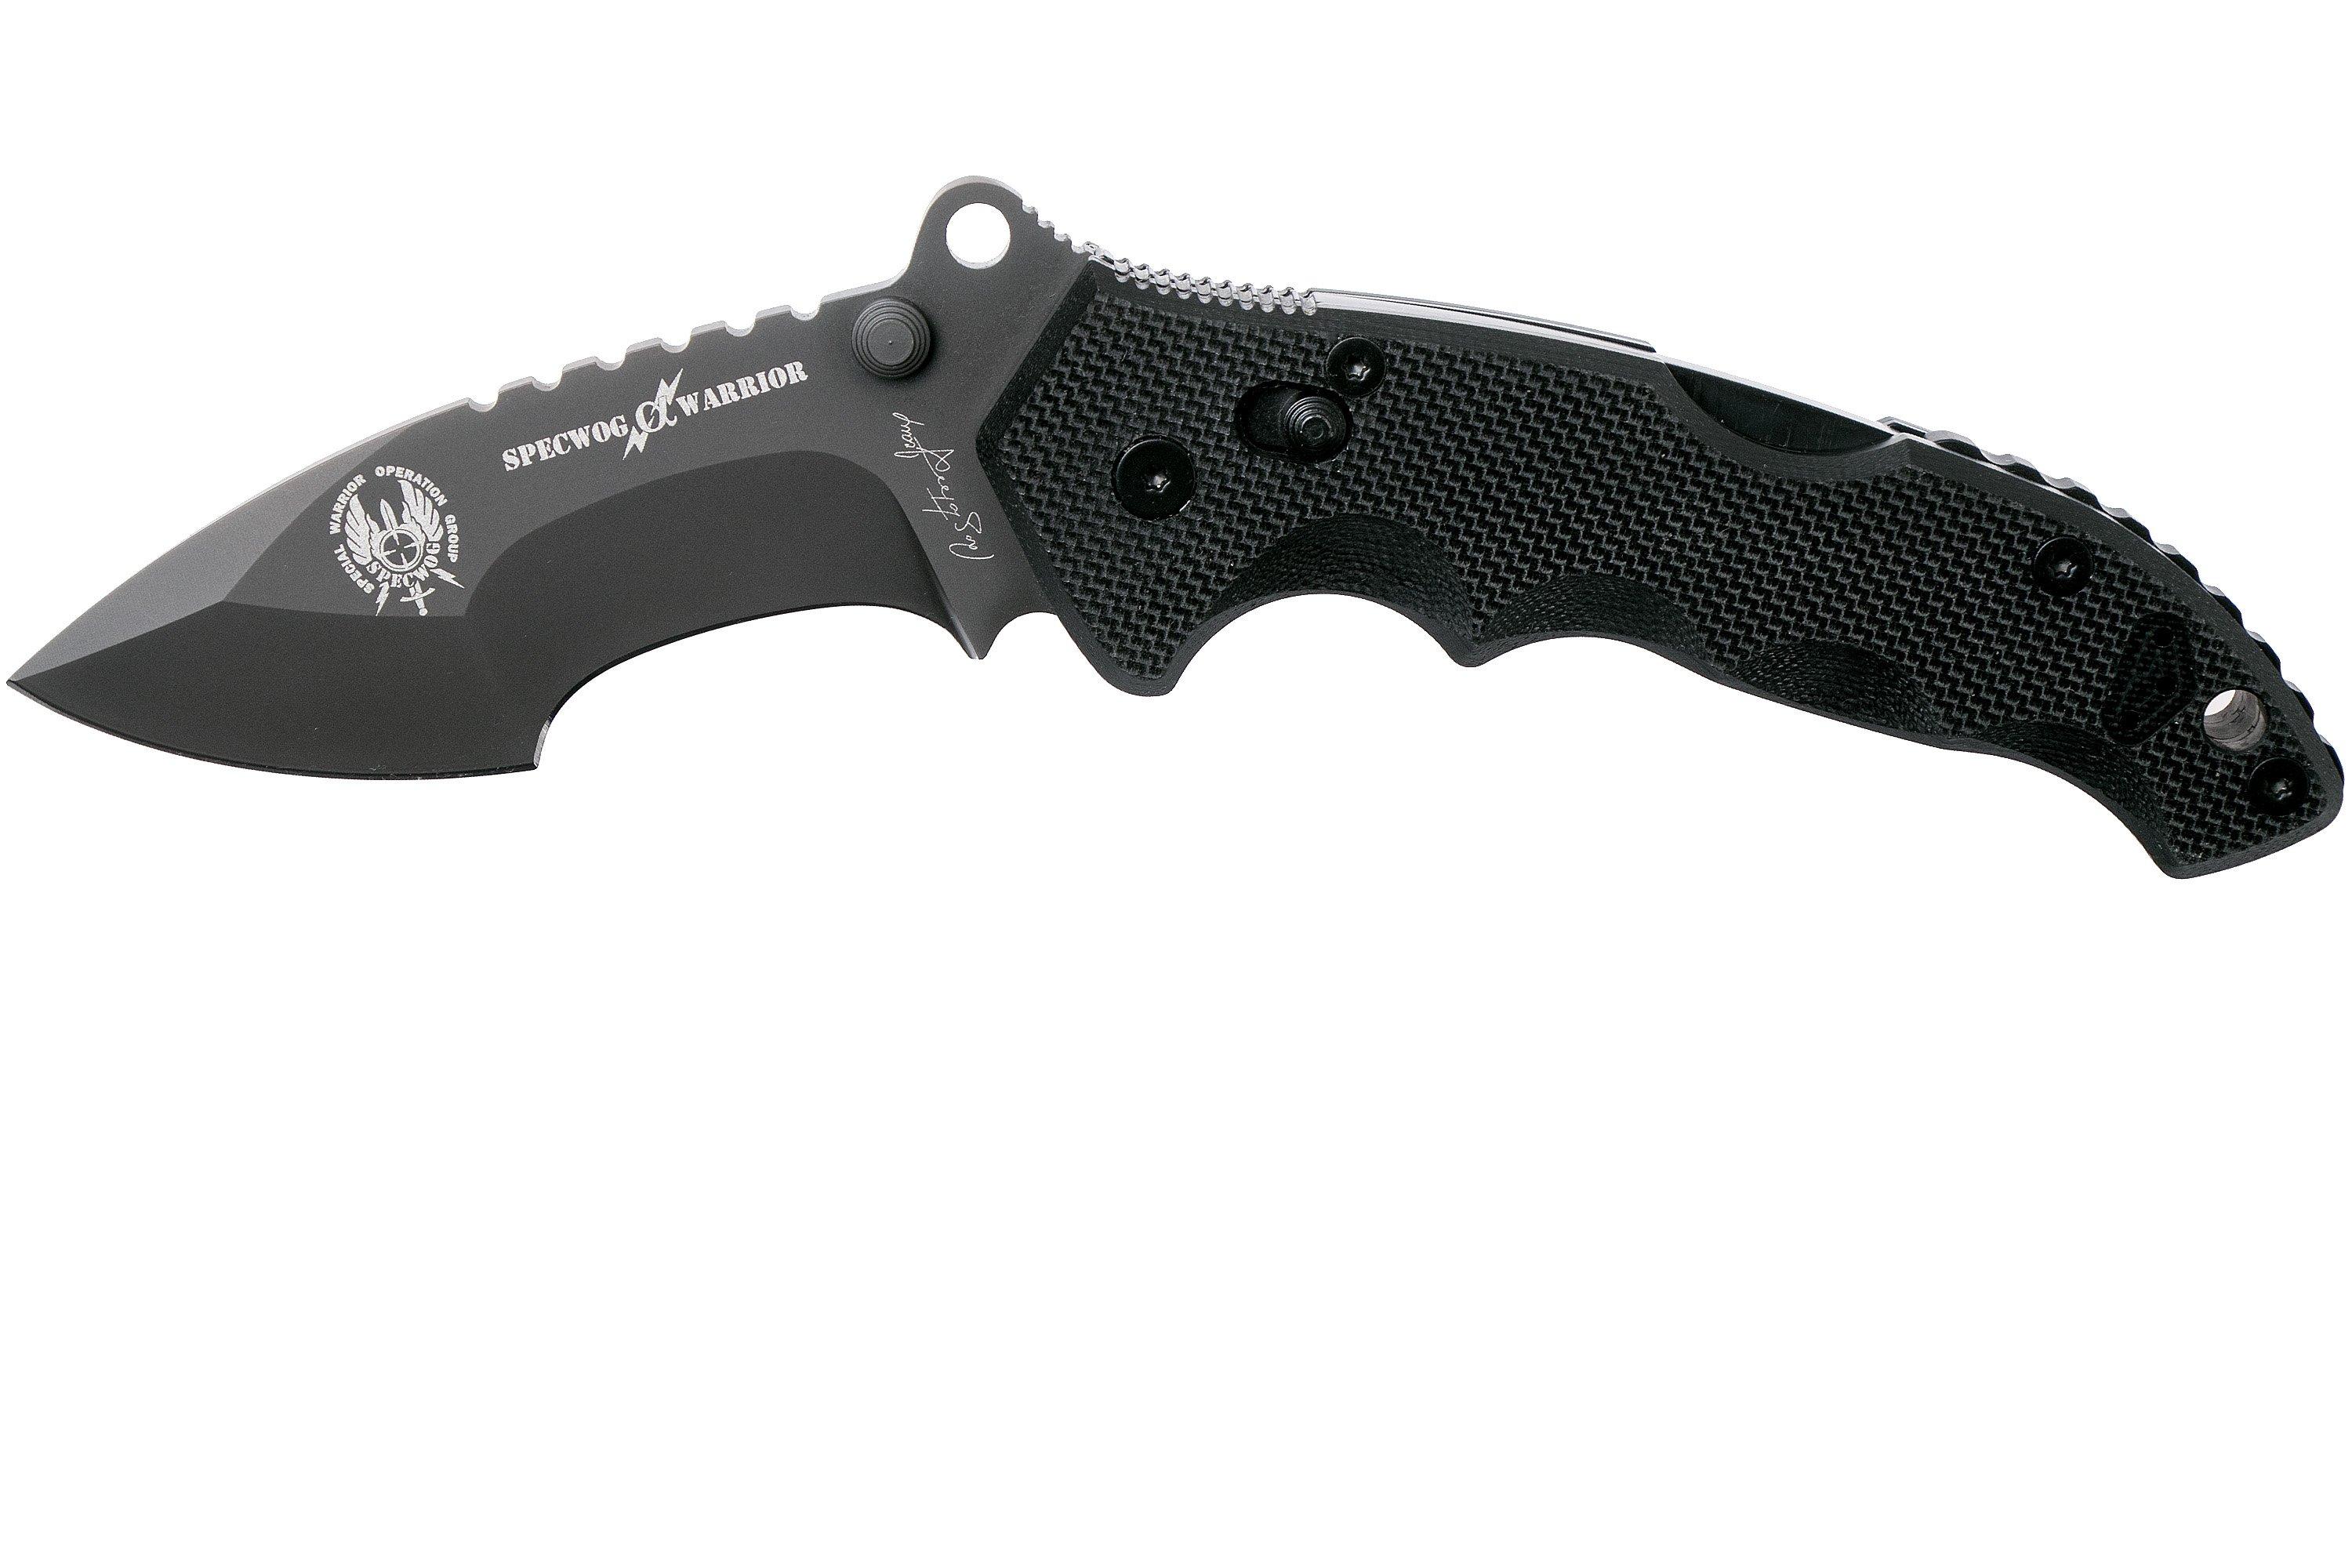 Fox Specwog Alpha FX-310 FKMD pocket knife, Dean Rostohar design ...